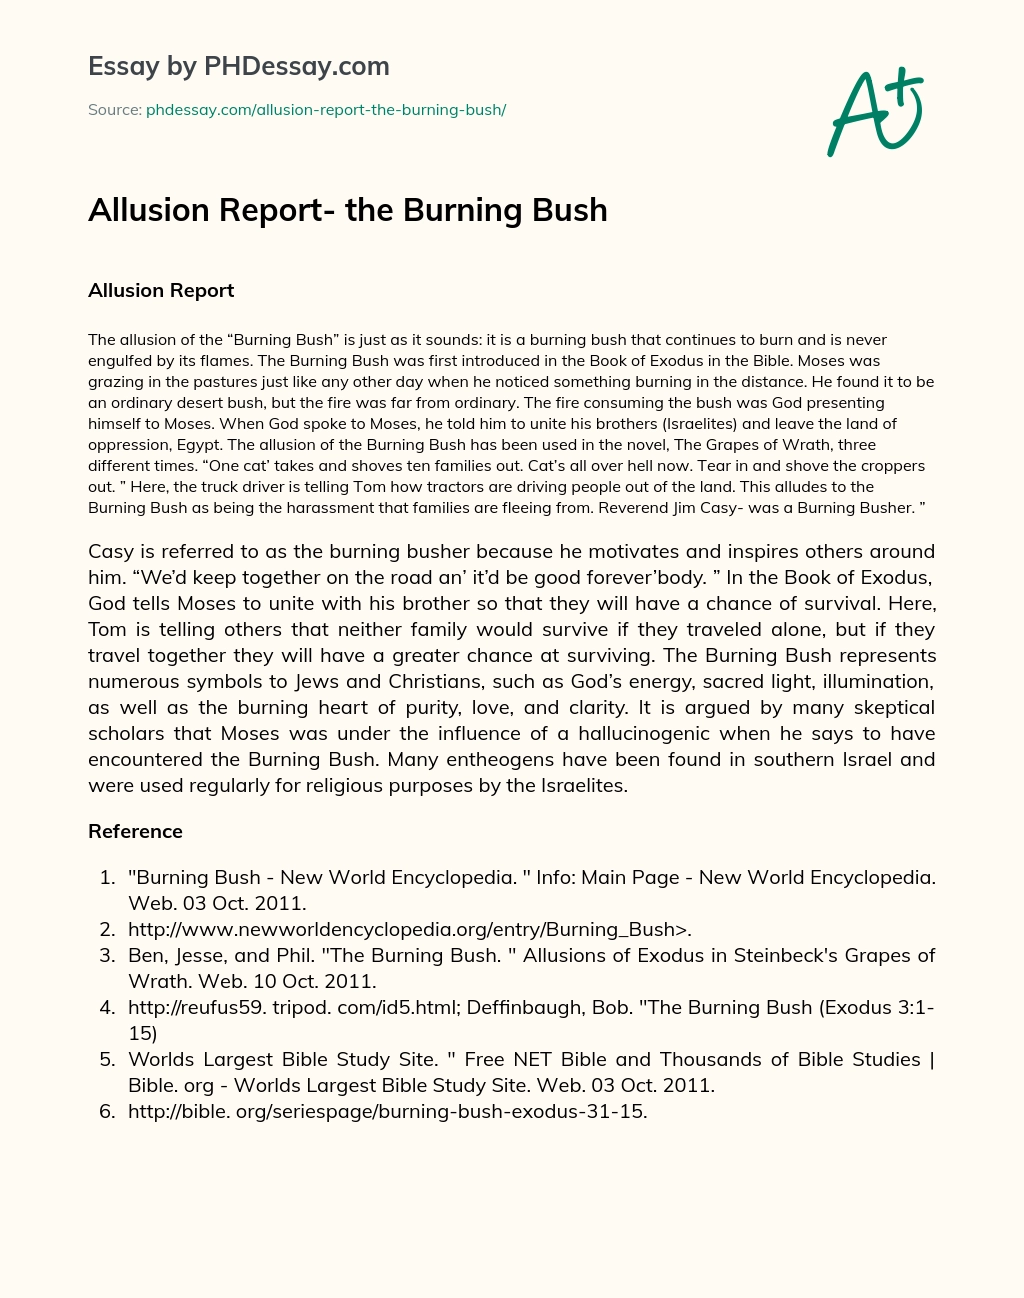 Allusion Report- the Burning Bush essay